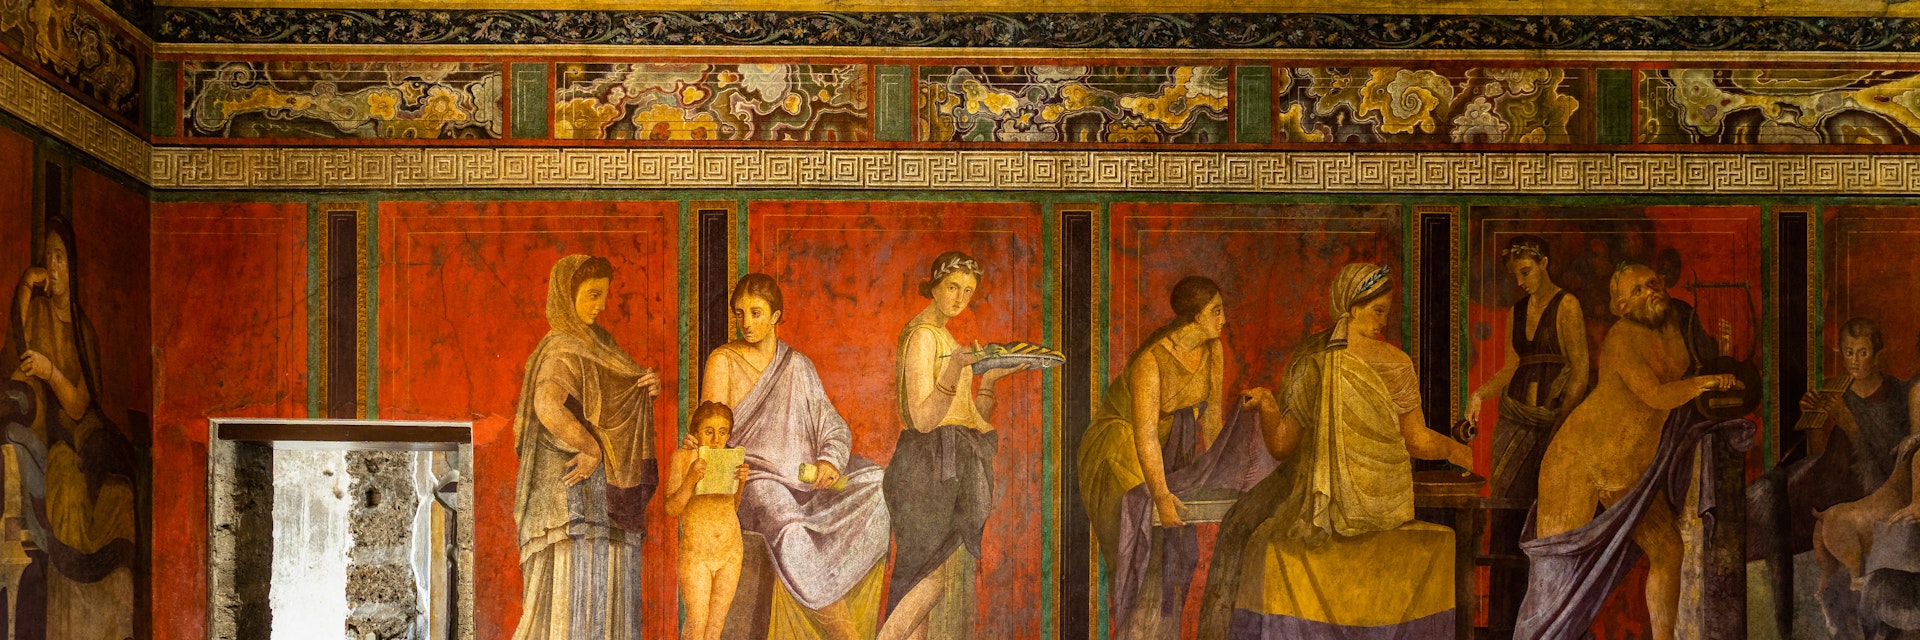 The frescoes of Villa dei Misteri (Villa of the Mysteries), an ancient Roman villa at Pompeii ancient city, Italy
1184945411
ancient city, pompeii ruins, roman city, villa dei misteri, villa of the mysteries